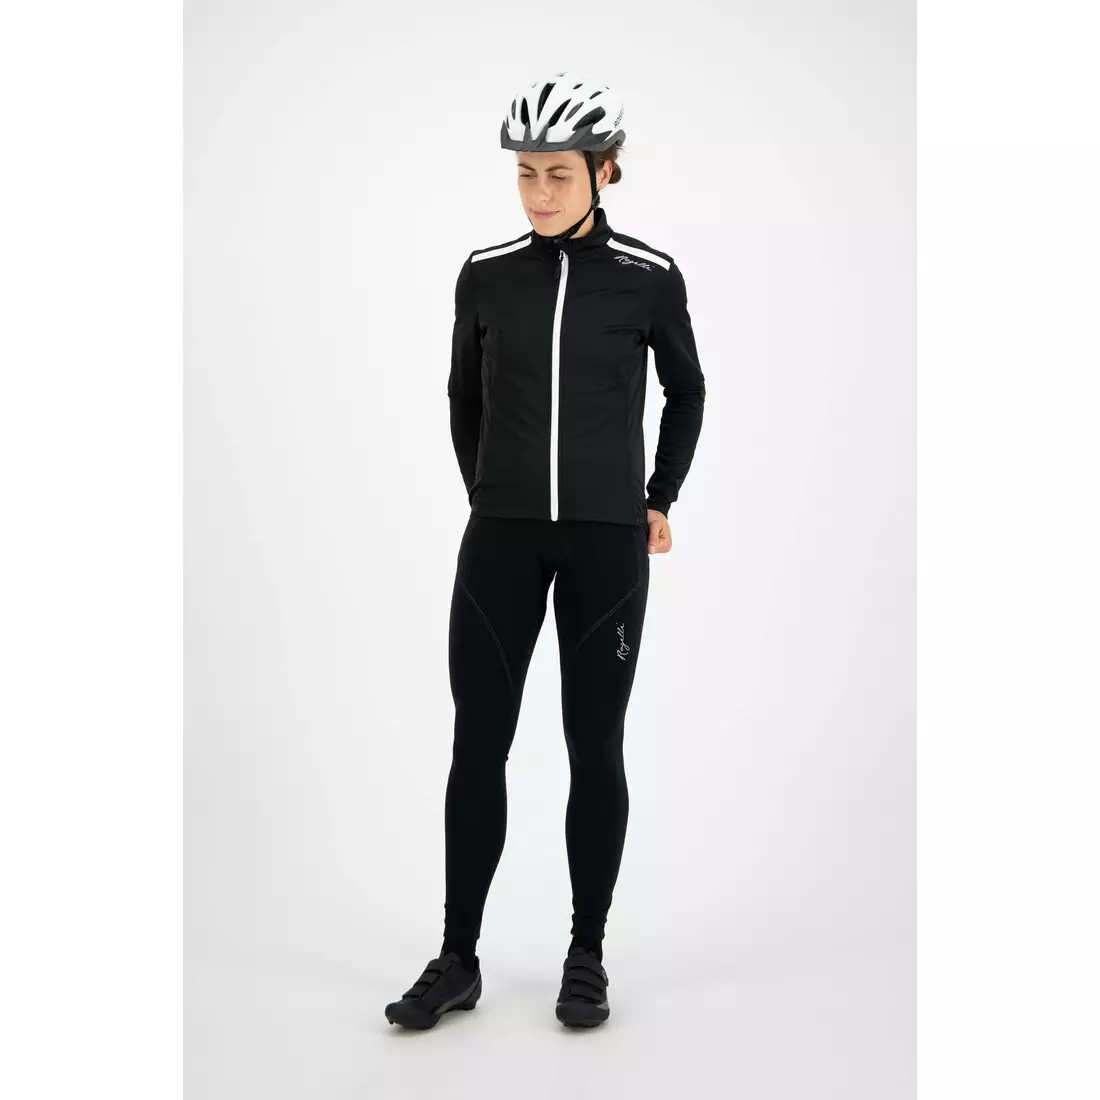 ROGELLI PESARA Dámská zimní cyklistická bunda, černá a bílá